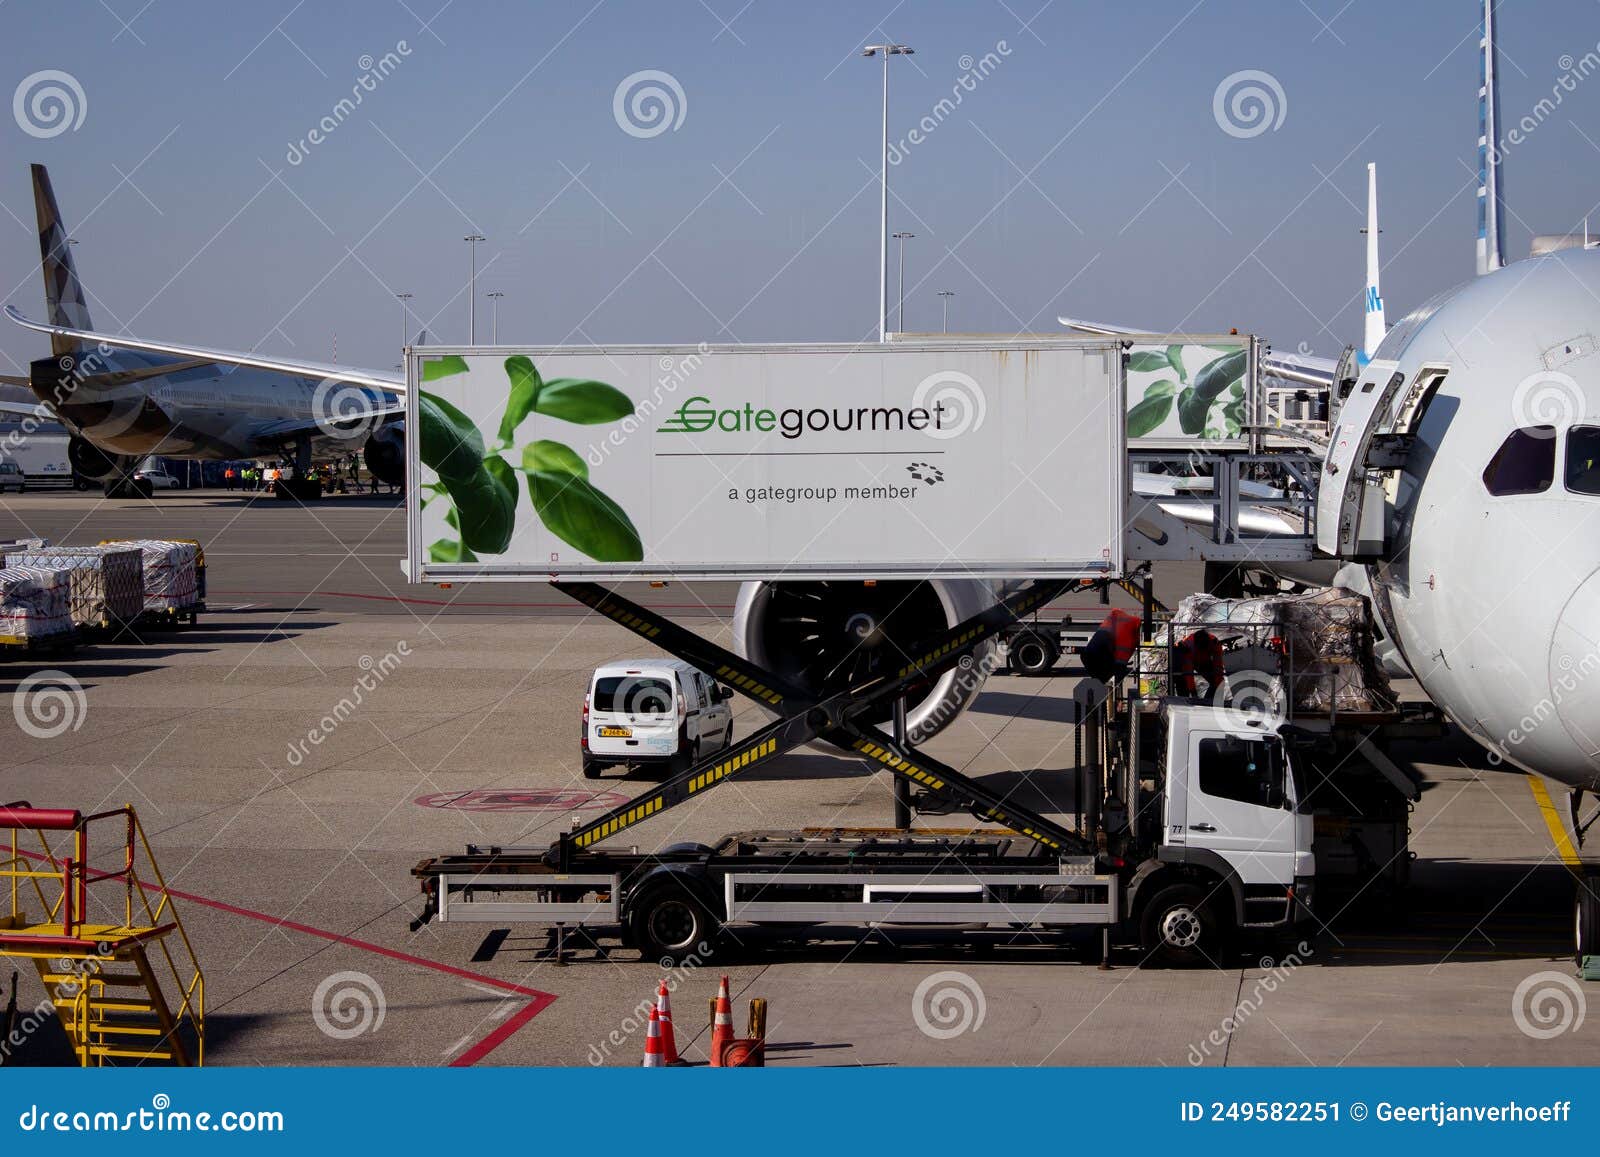 eenvoudig Integratie tragedie Gate Gourmet Loading Catering into Airplane Editorial Photo - Image of  flight, netherlands: 249582251